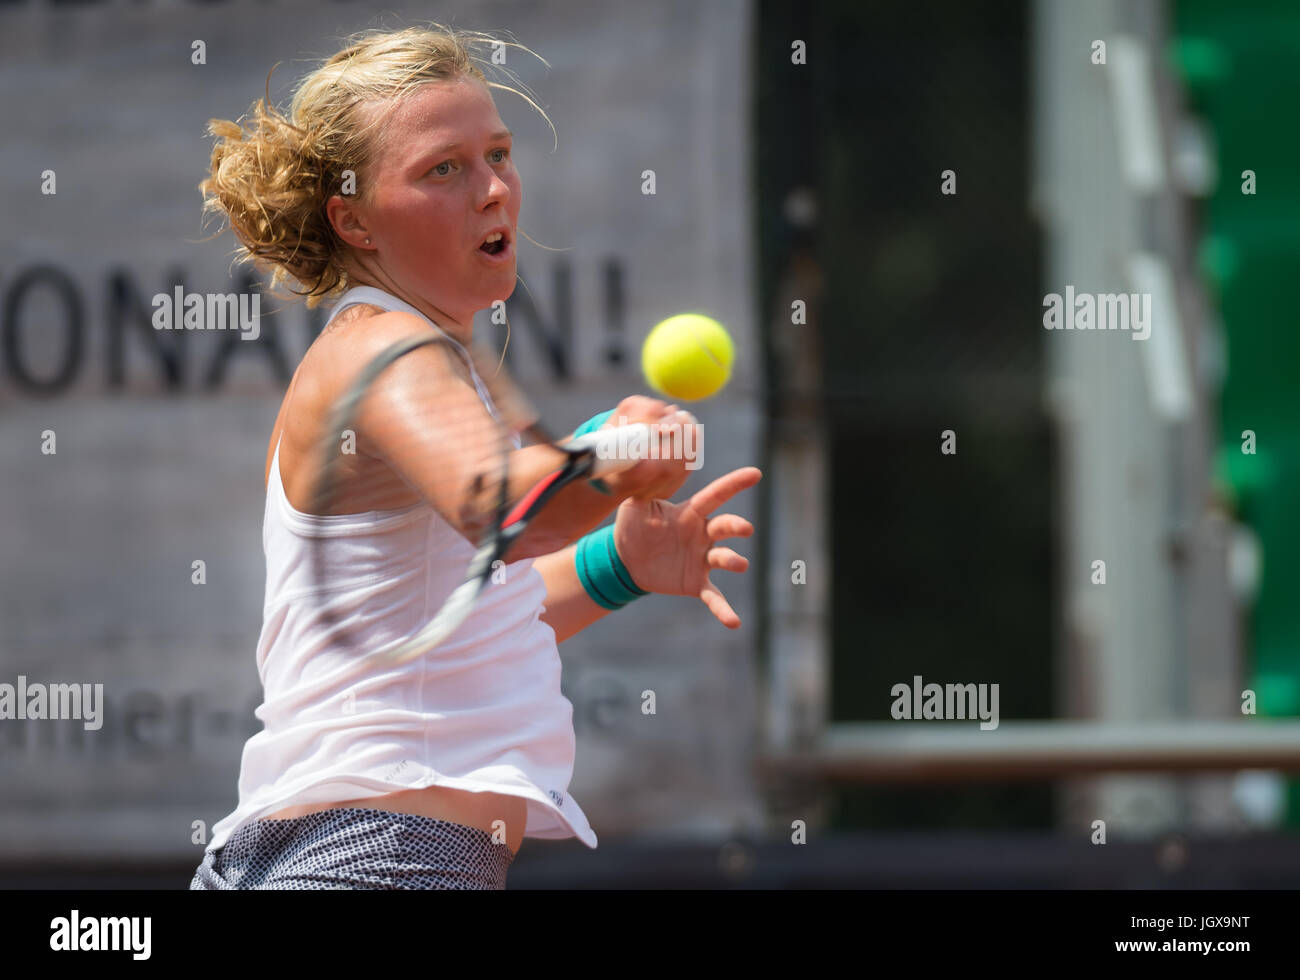 Versmold, Germany. 11 July, 2017. Lena Rueffer at the 2017 Reinert Open ITF $60 tennis tournament © Jimmie48 Photography/Alamy Live News Stock Photo